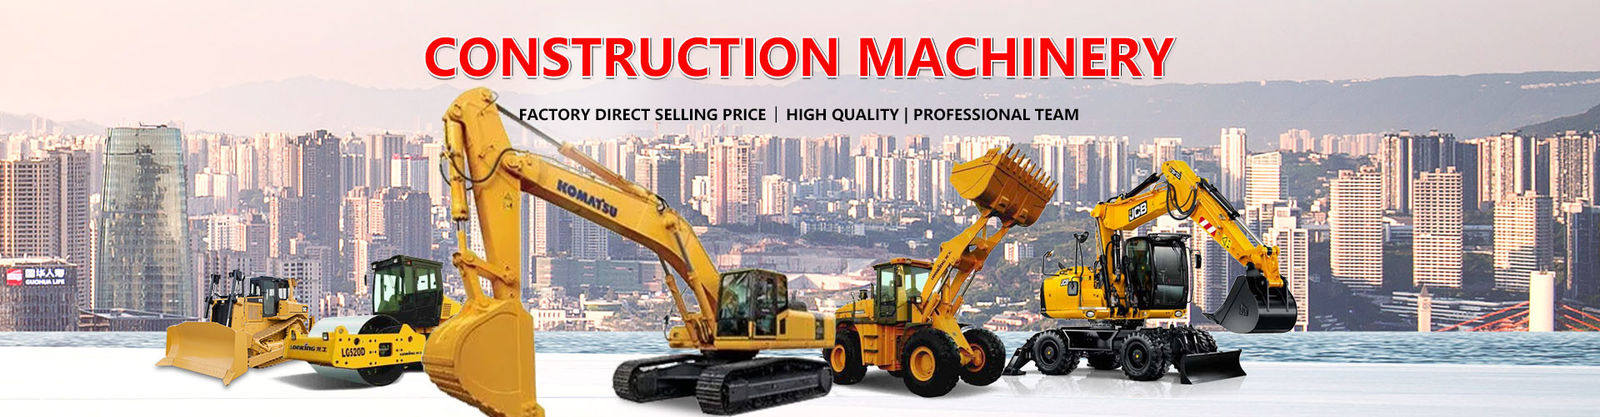 Chongqing Puerteck Engineering Machinery Co., Ltd  